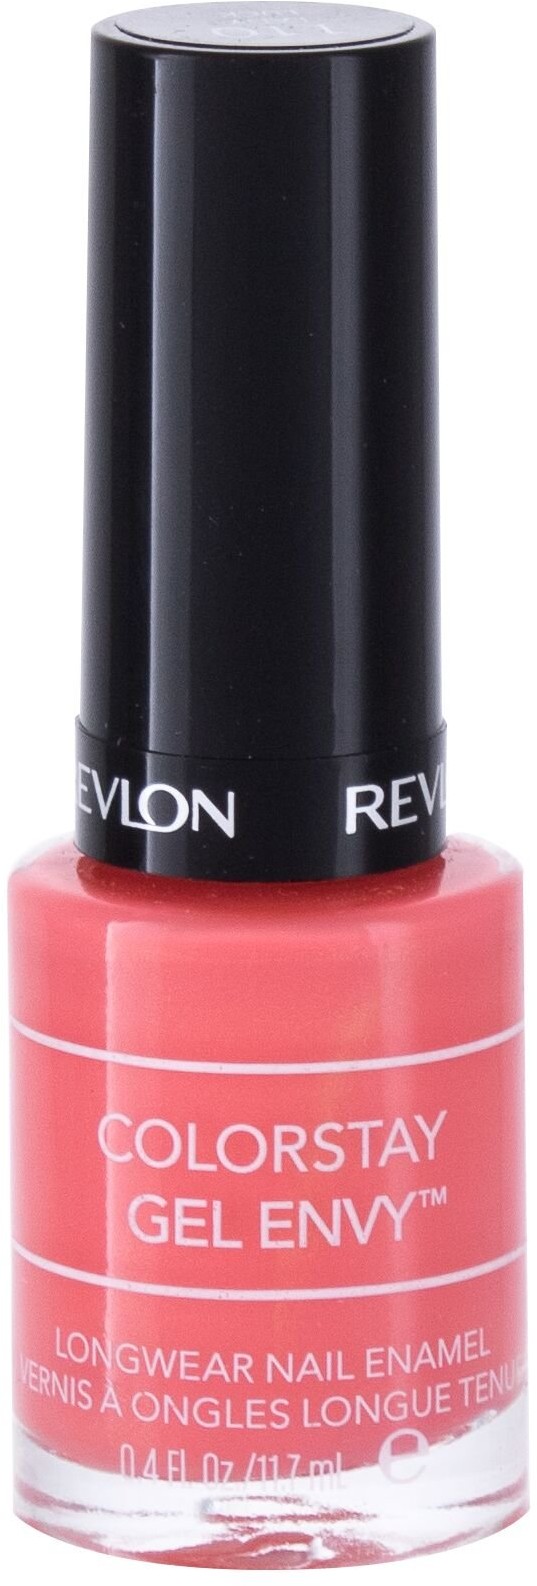 Revlon Colorstay Gel Envy lakier do paznokci 11,7 ml dla kobiet 110 Lady Luck 11,7ml